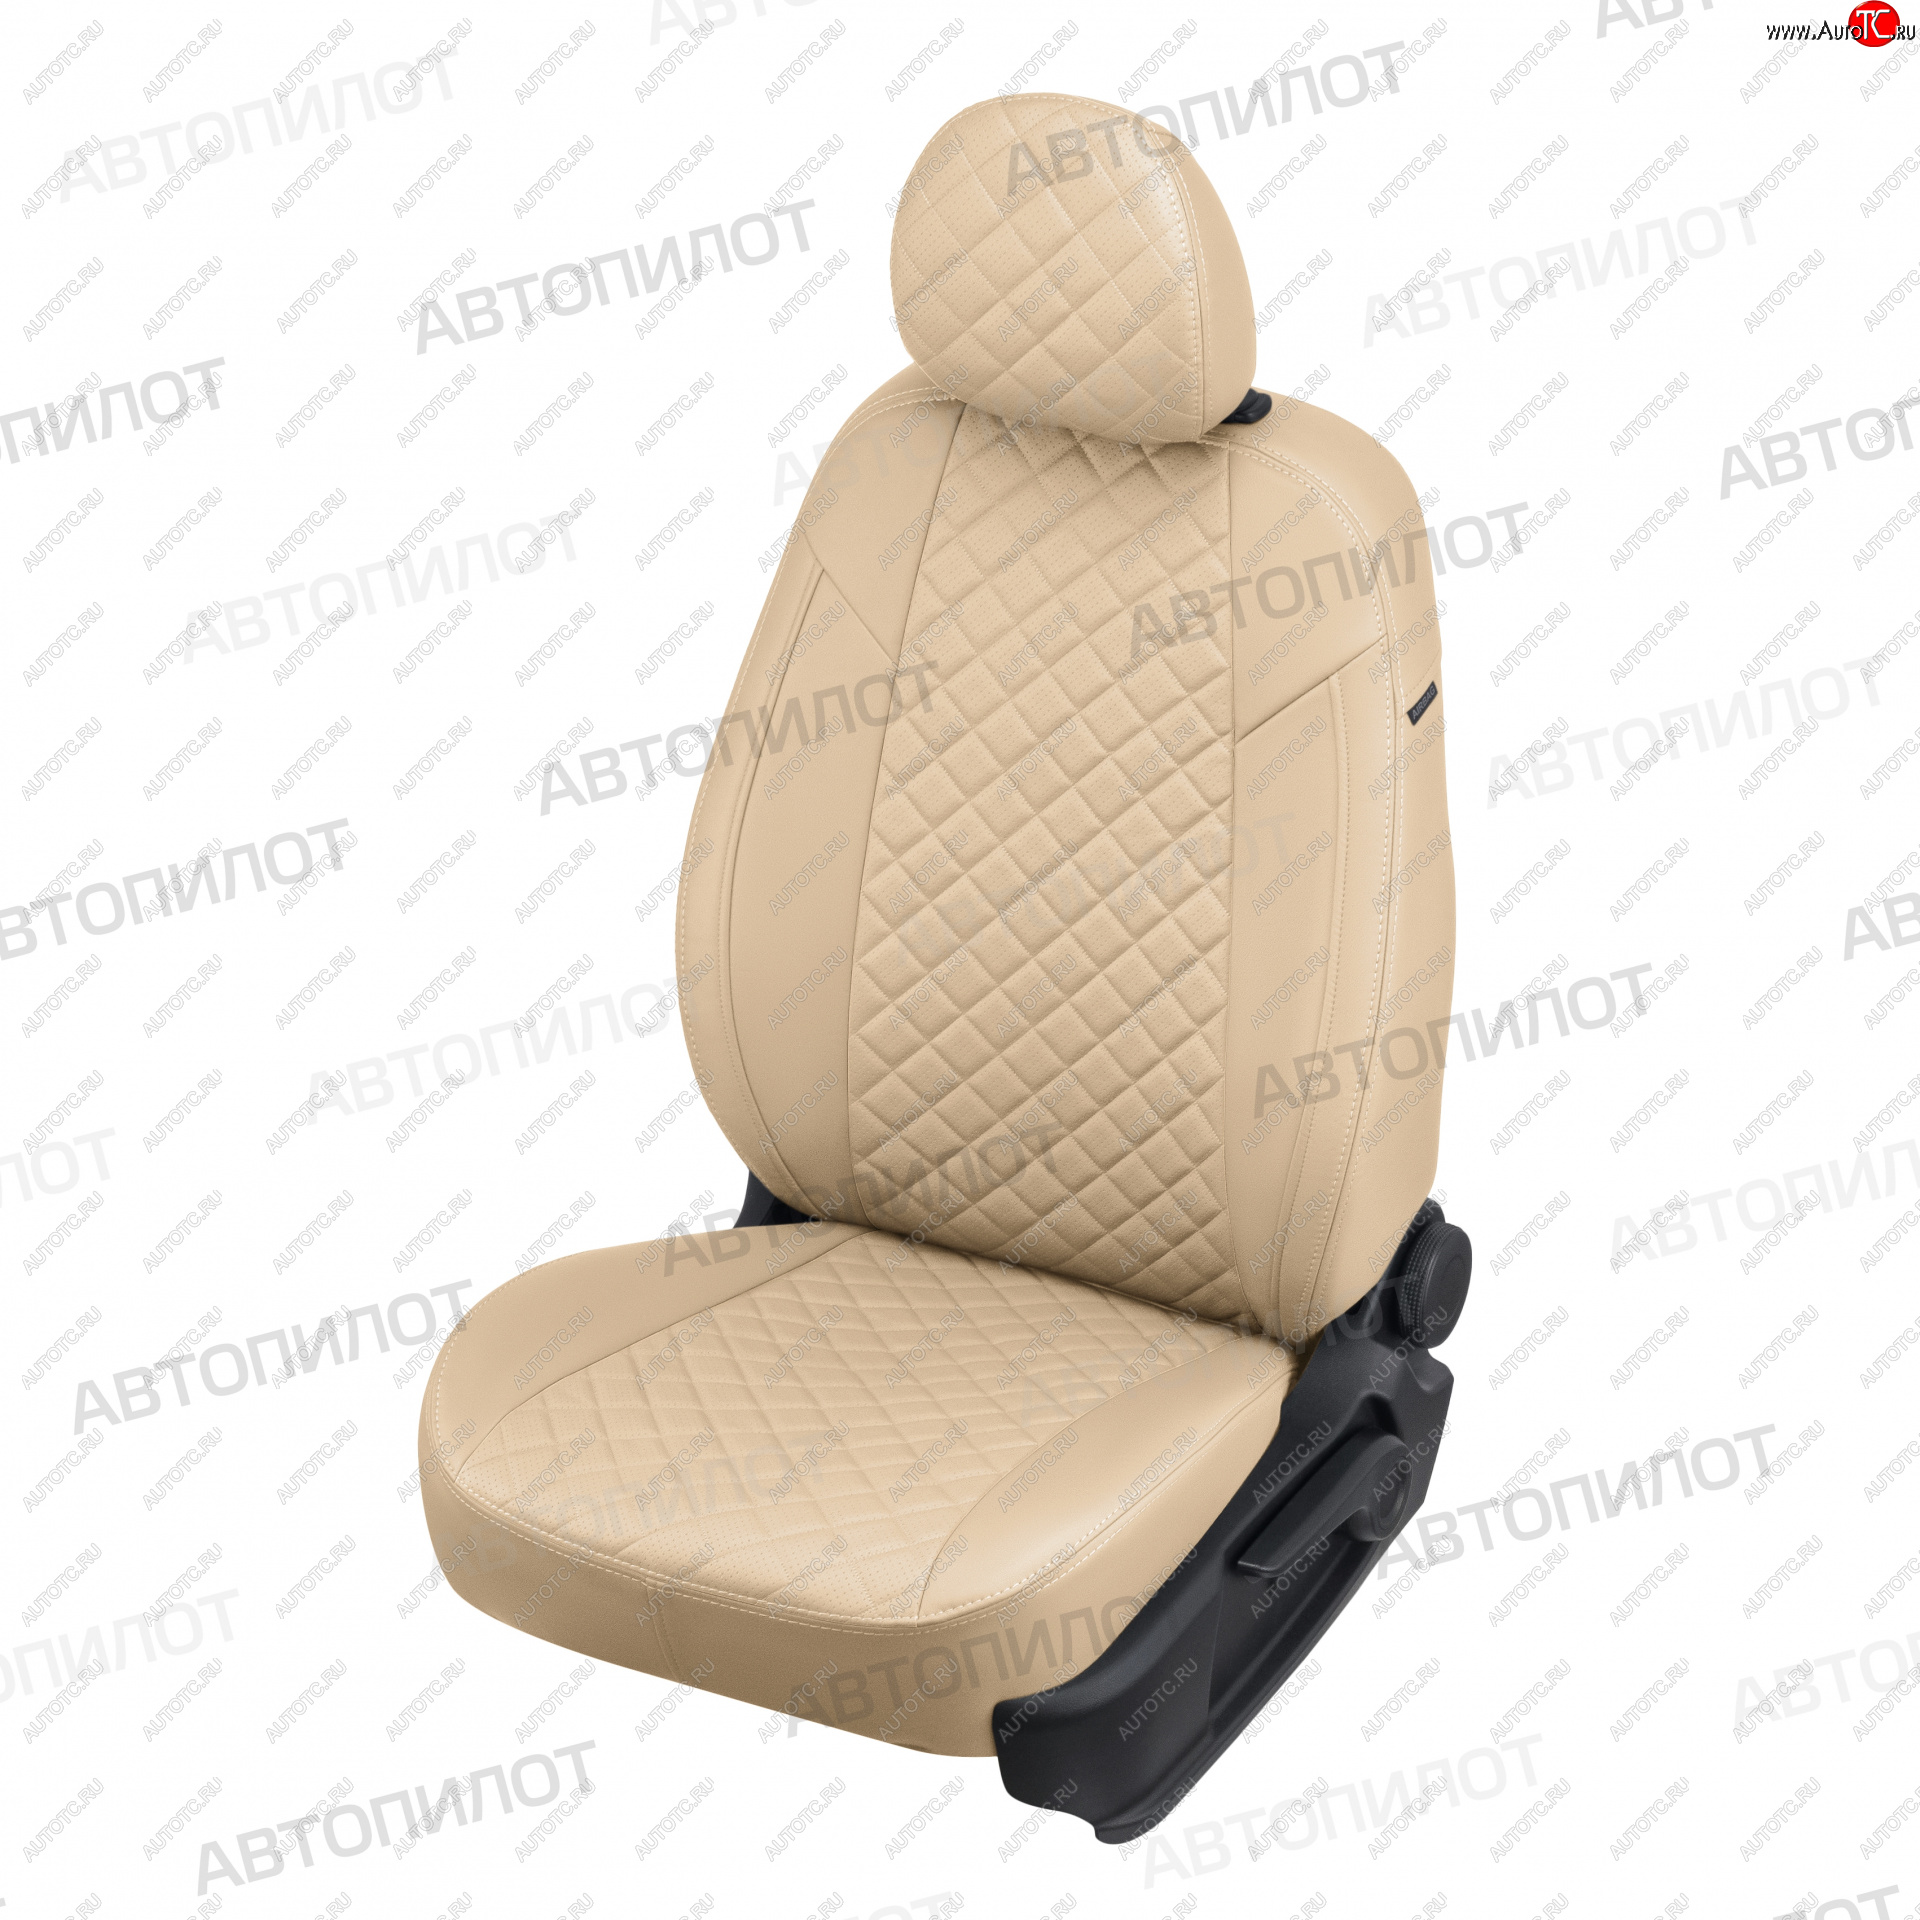 13 999 р. Чехлы сидений (5 мест, экокожа) Автопилот Ромб  Ford Galaxy  2 (2006-2015) (бежевый)